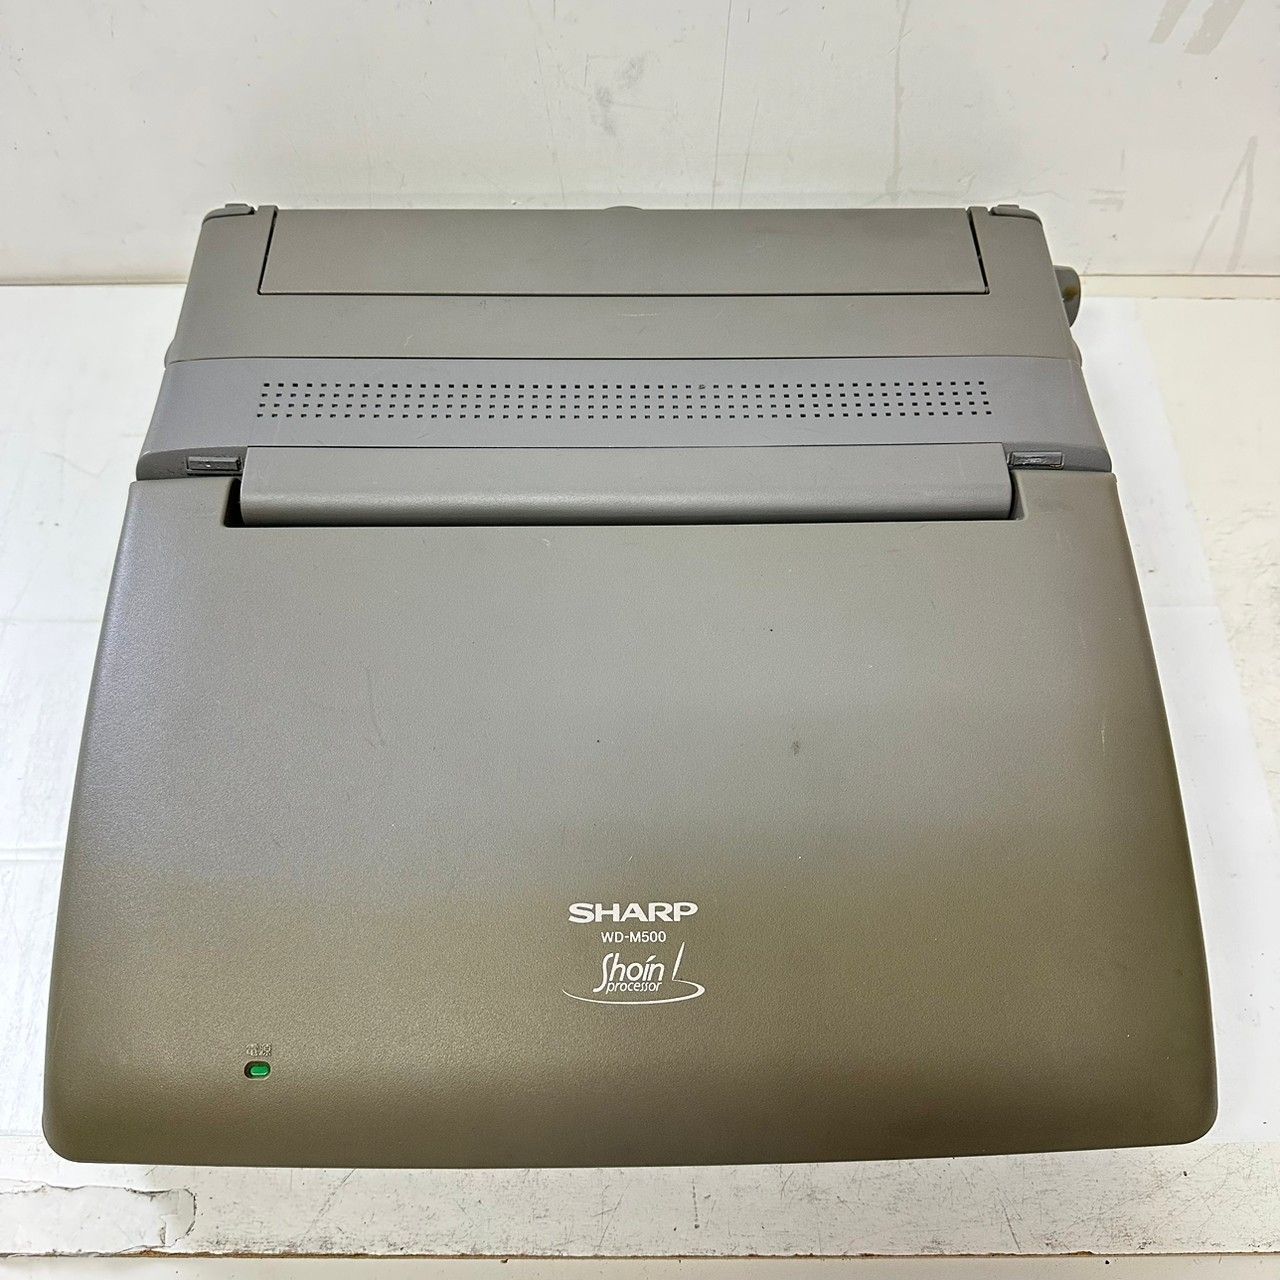 SHARP/シャープ カラー液晶ワープロ 書院 WD-M300 4939 リユースショップ ヤマト メルカリ